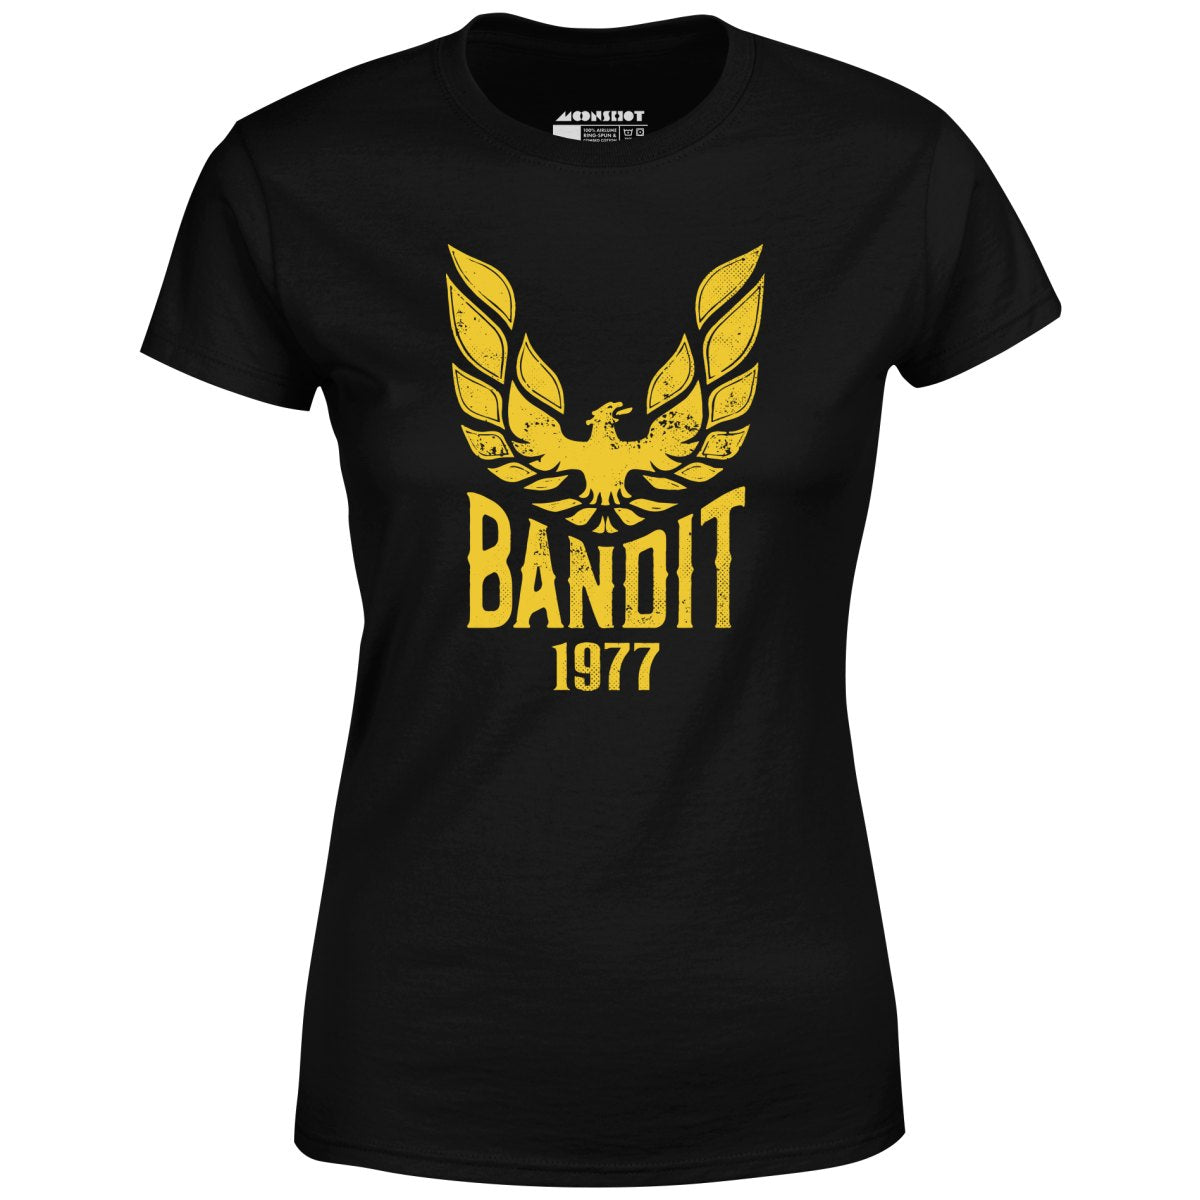 Bandit 1977 - Women's T-Shirt